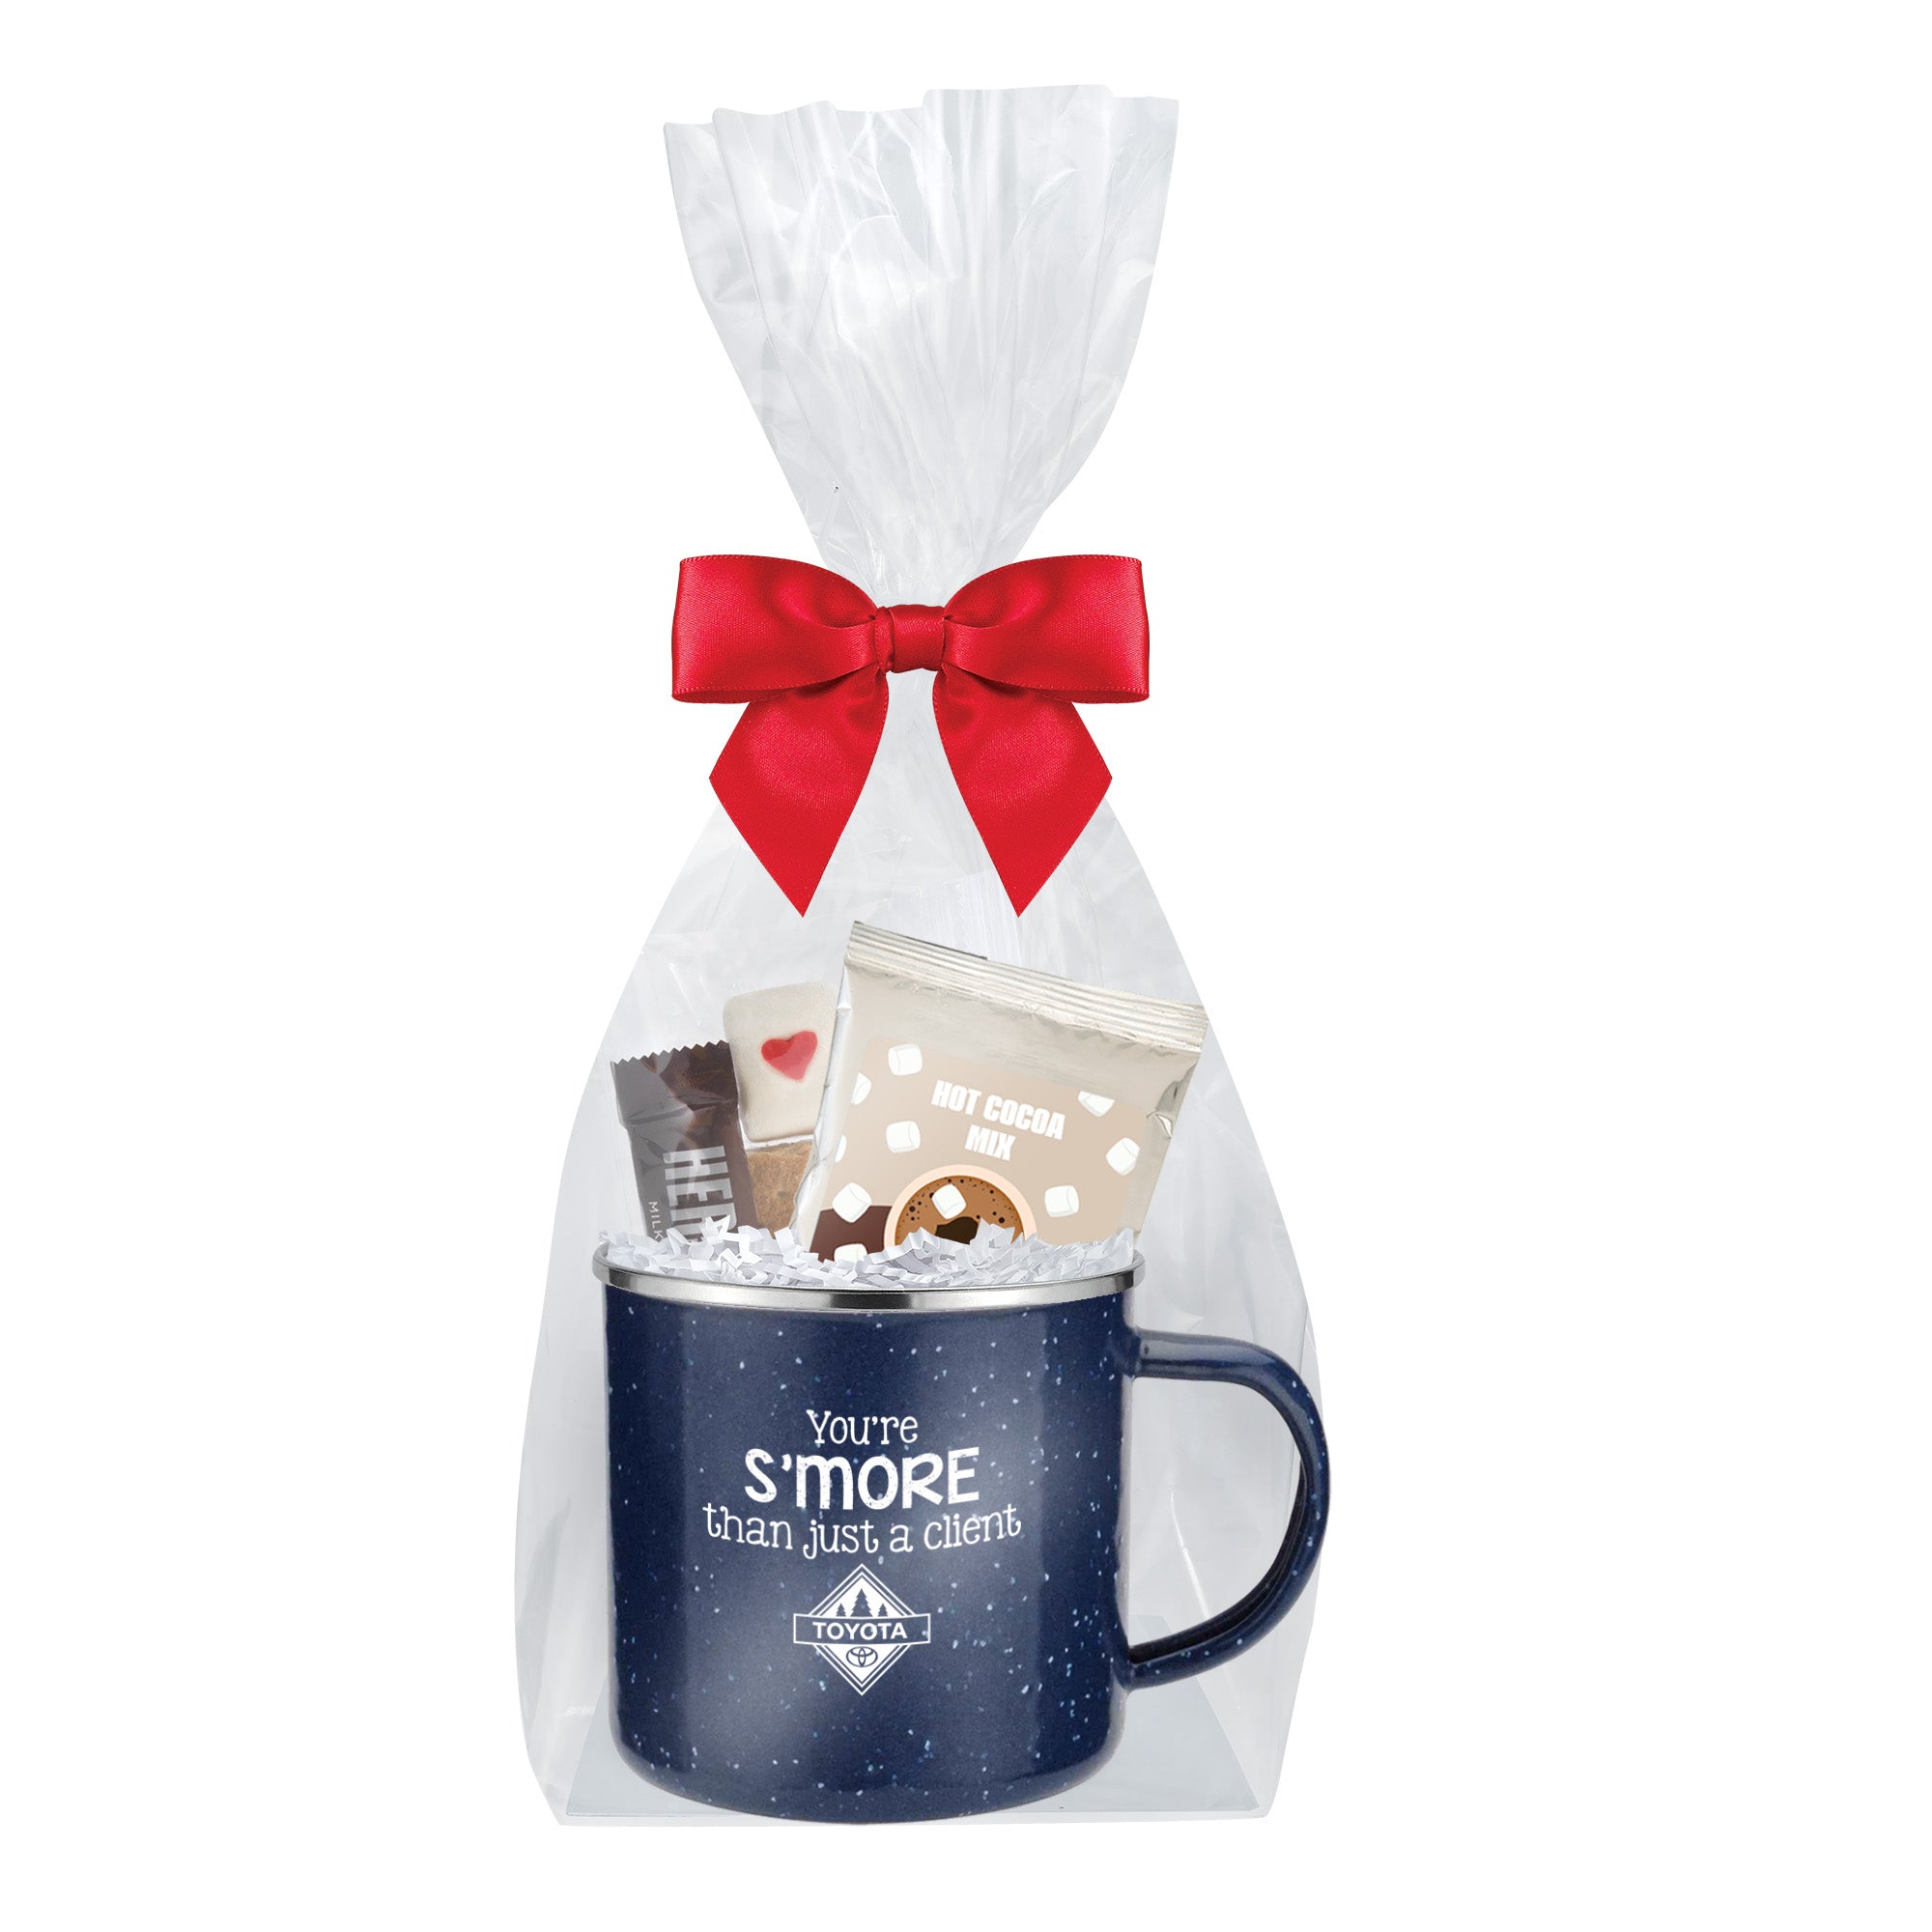 Mug Cake Gift Set - Yay Your Day - [Consumer]Slant Collections